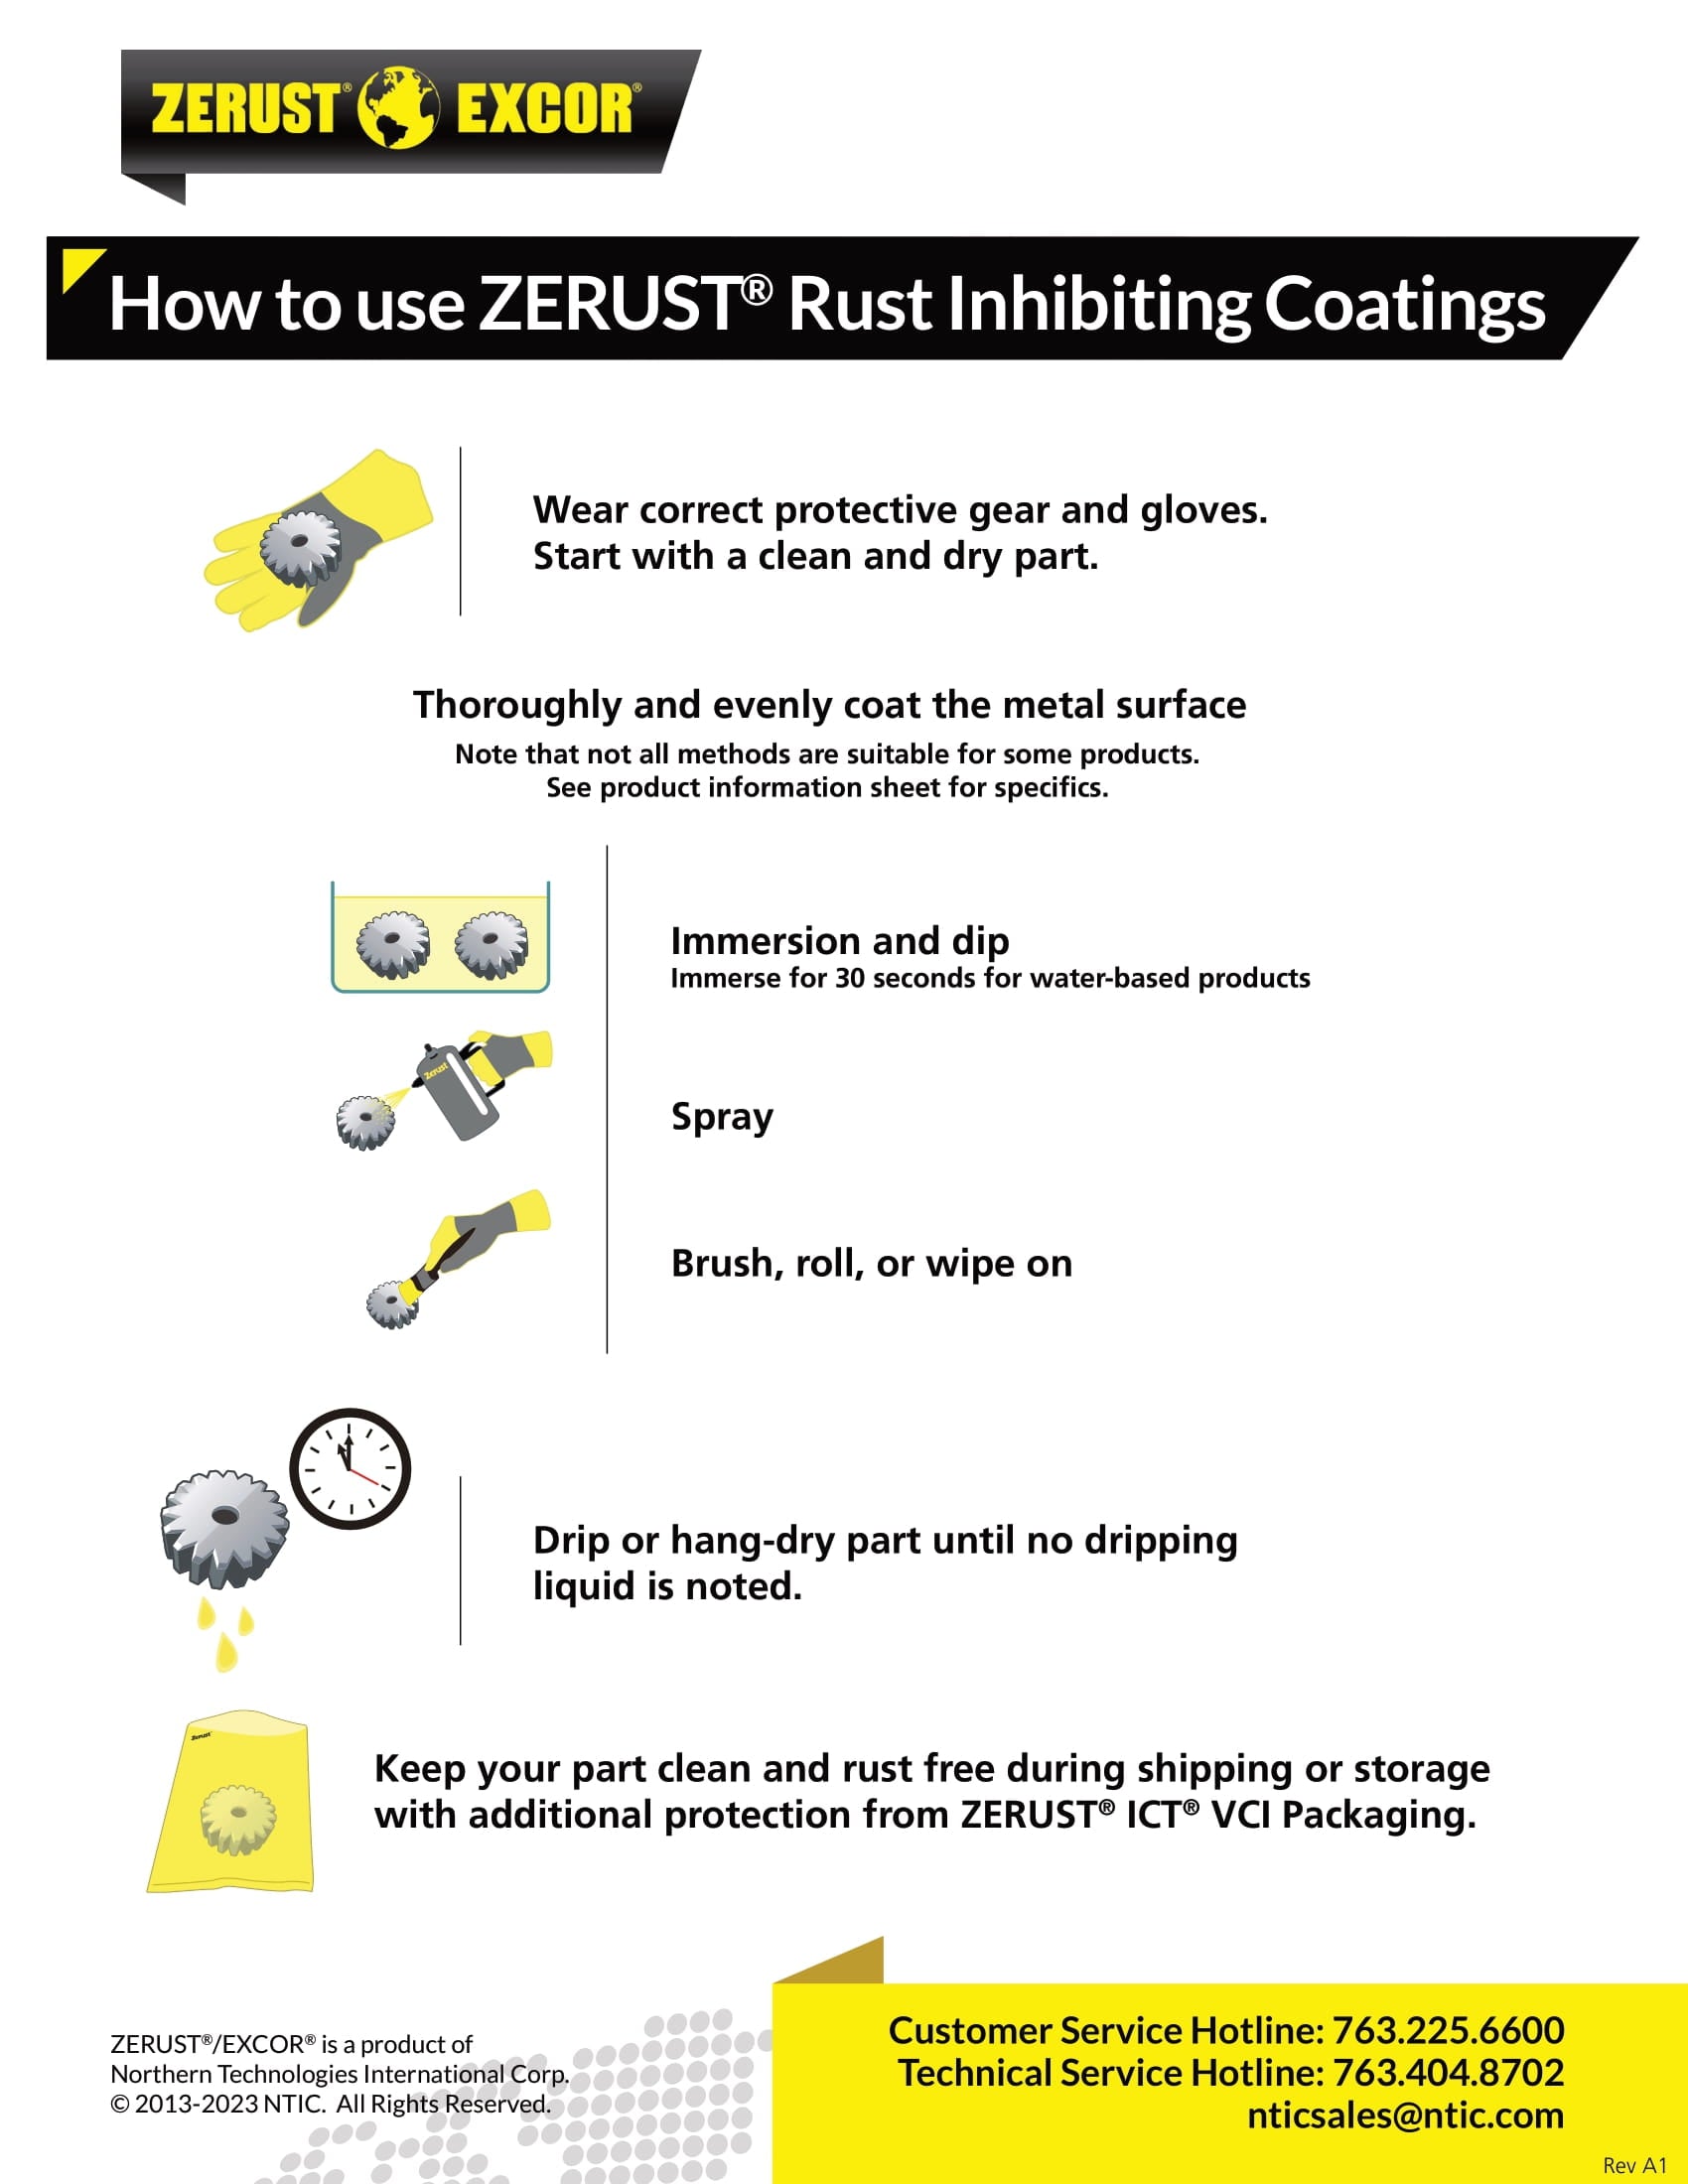 Zerust rustbeskyttende coating - Reál Marine AS